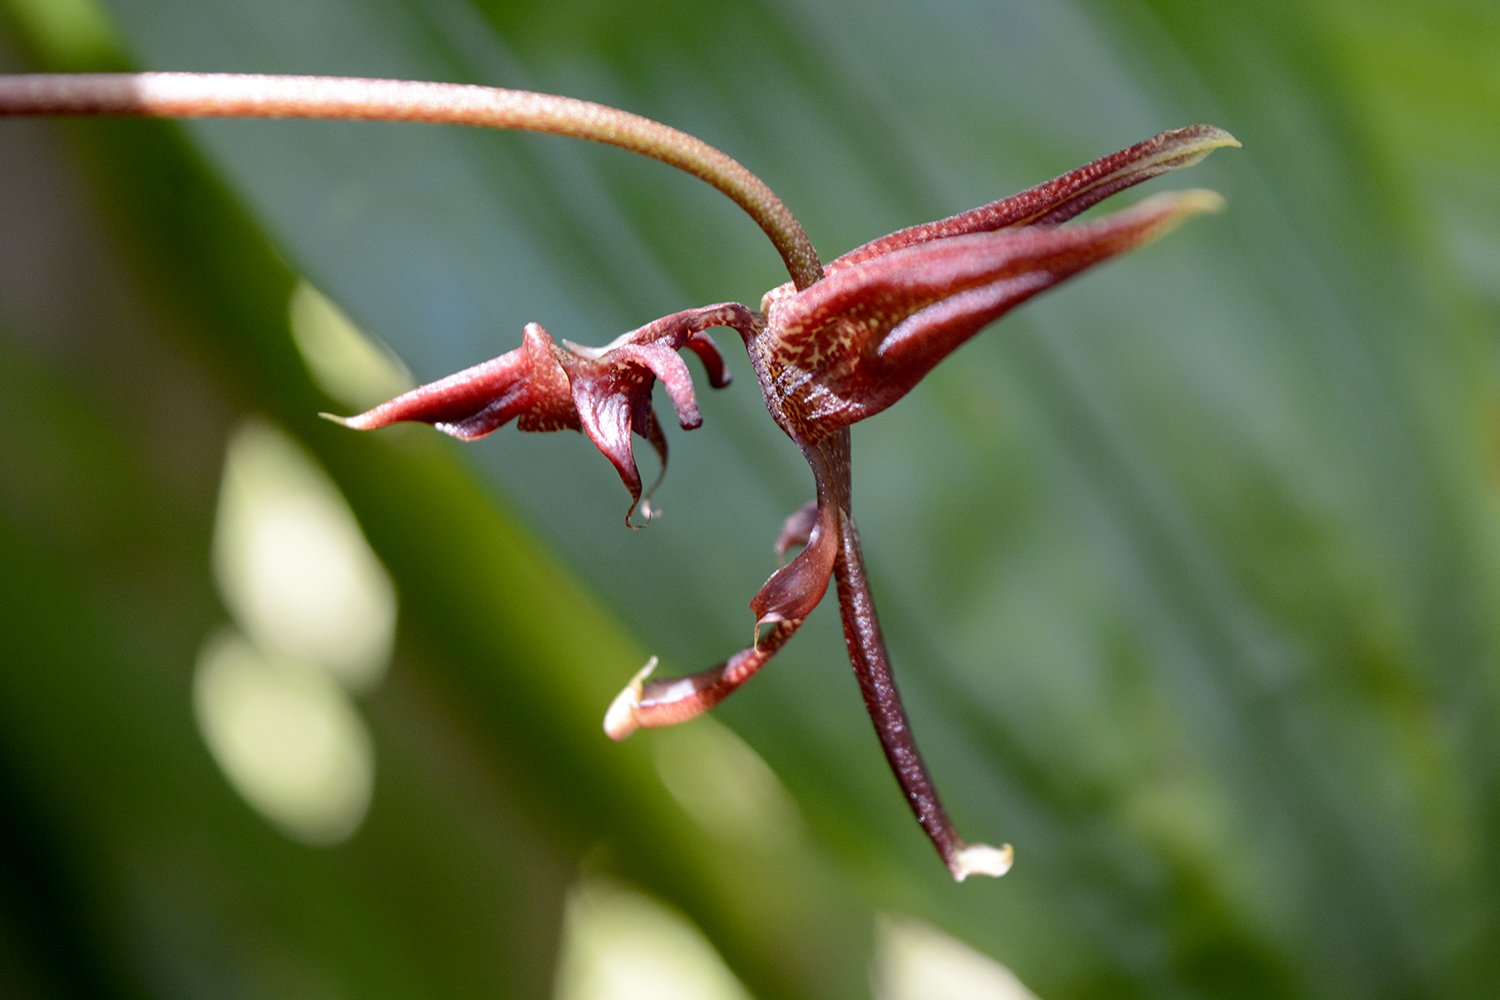 Gongora orchid smaller_DSC3838.jpg